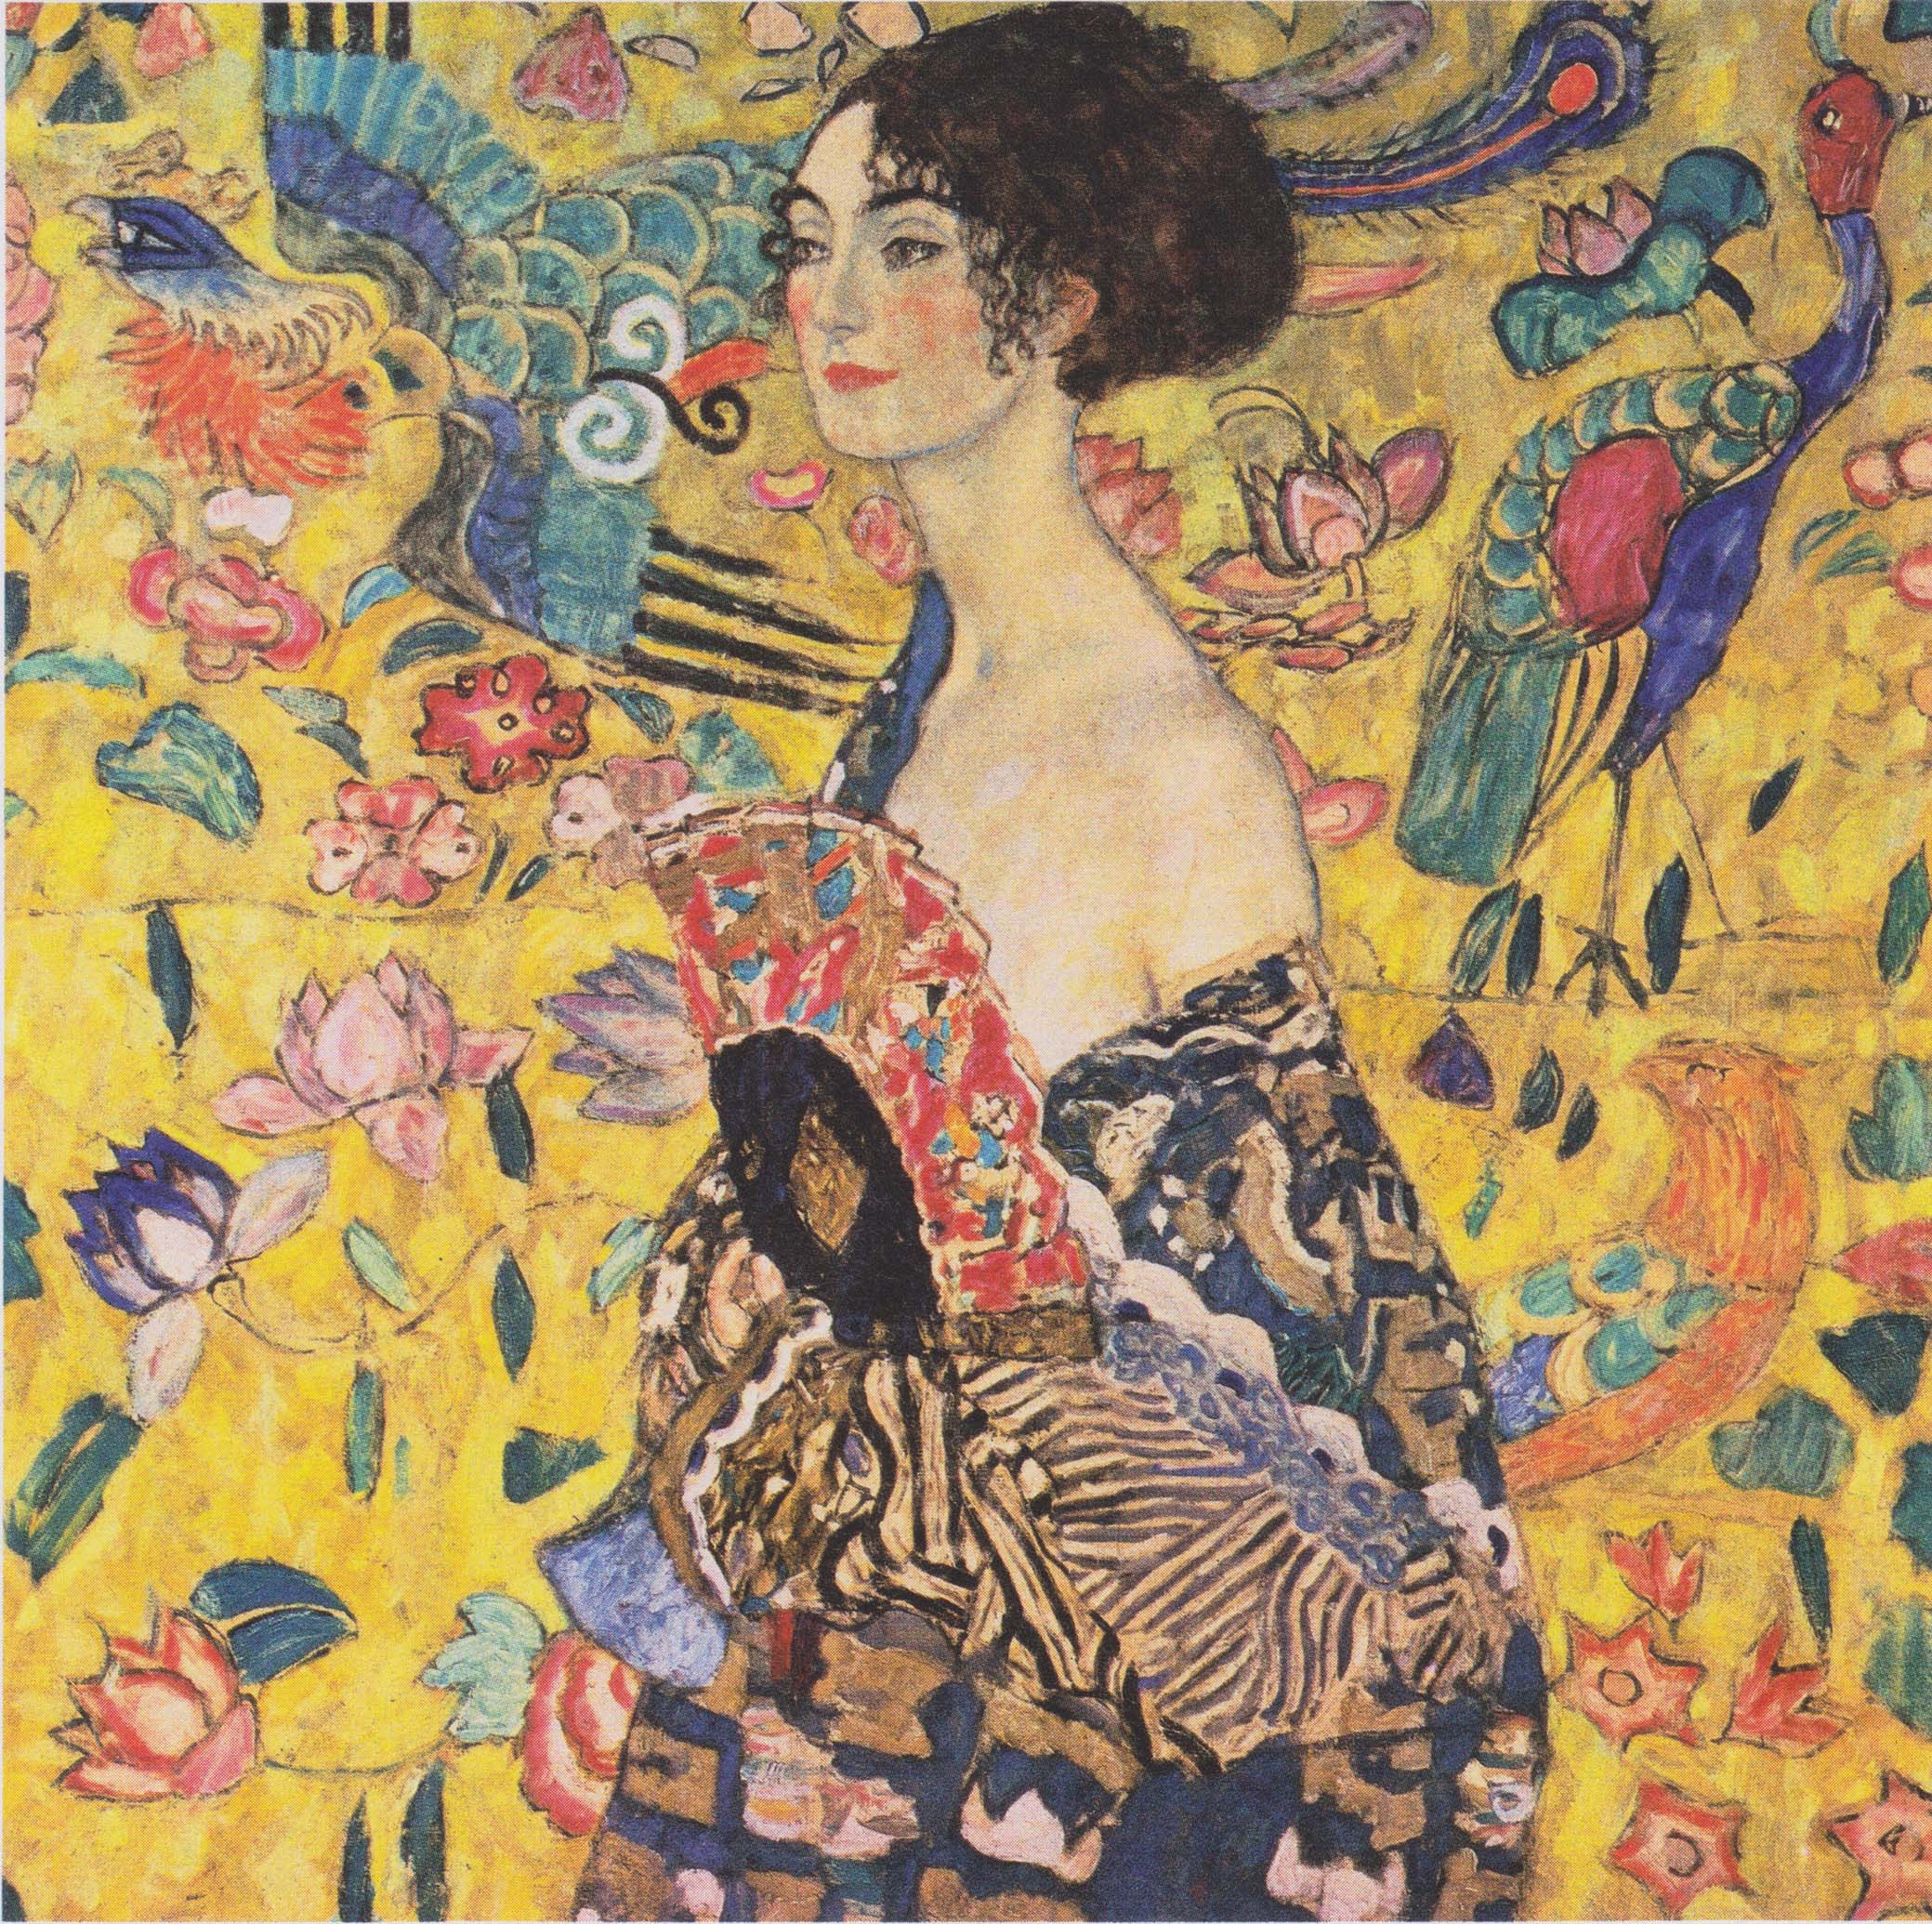 The original Lady with a Fan by Gustav Klimt